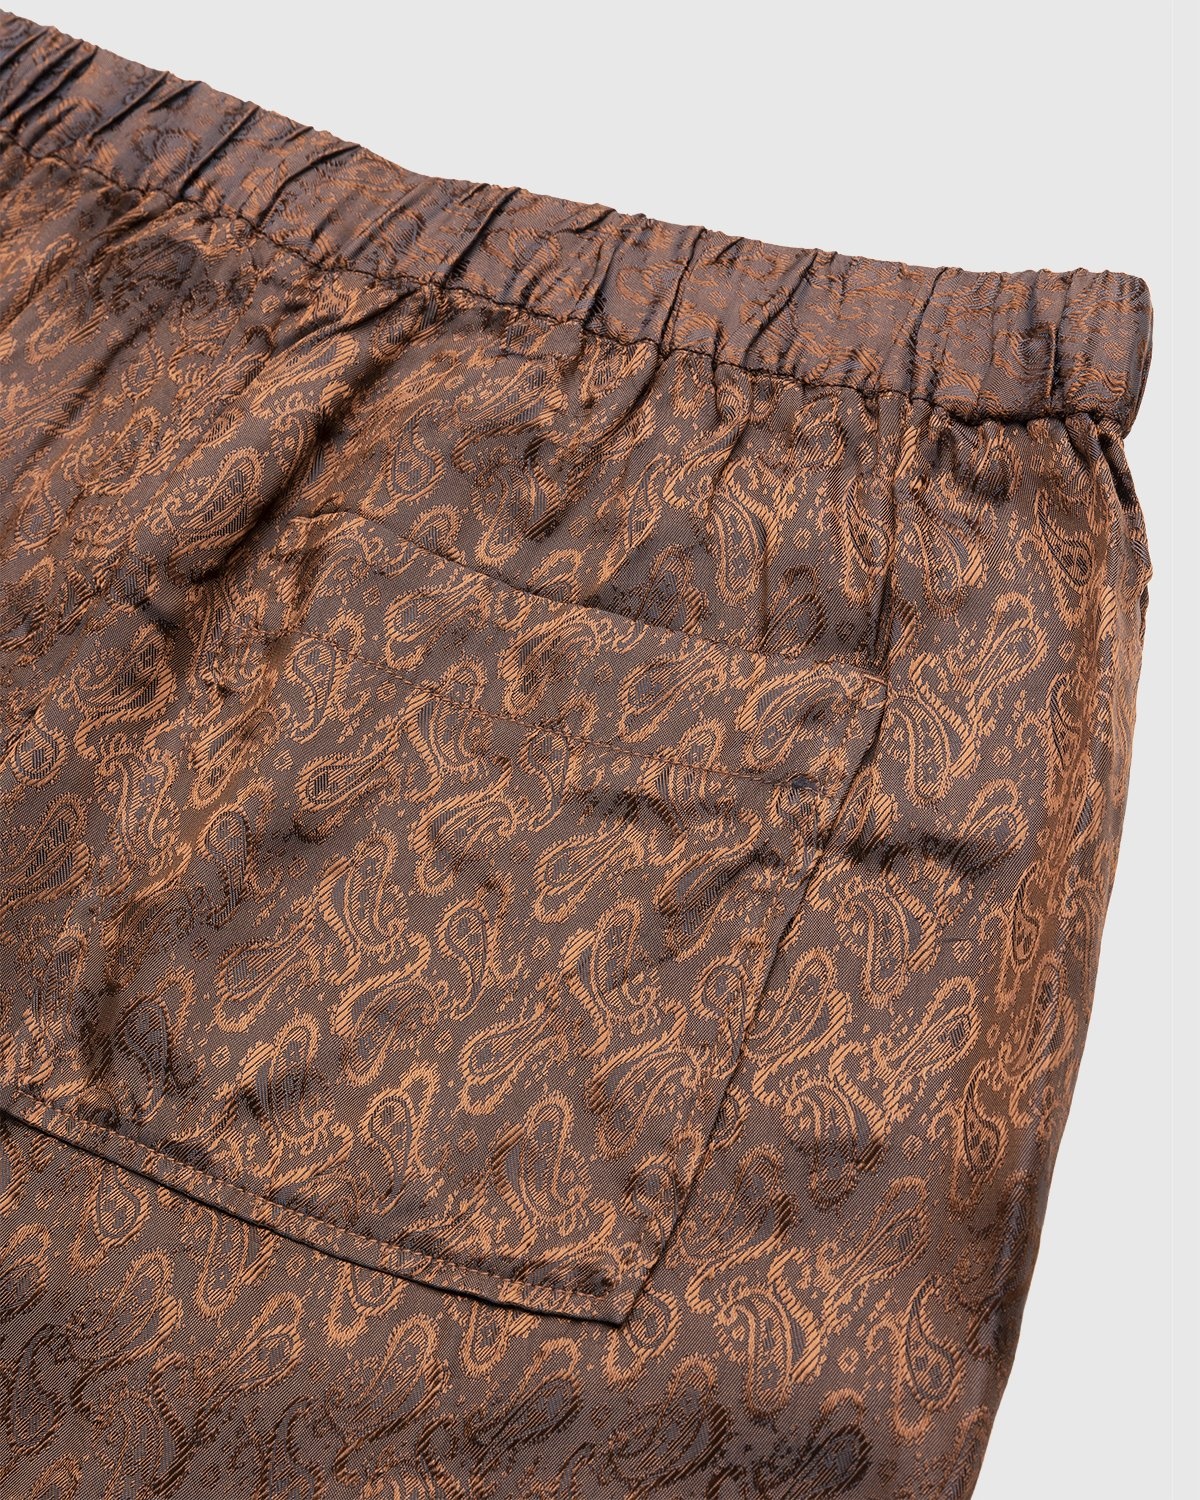 Acne Studios – Jacquard Trousers Brown - Pants - Brown - Image 3